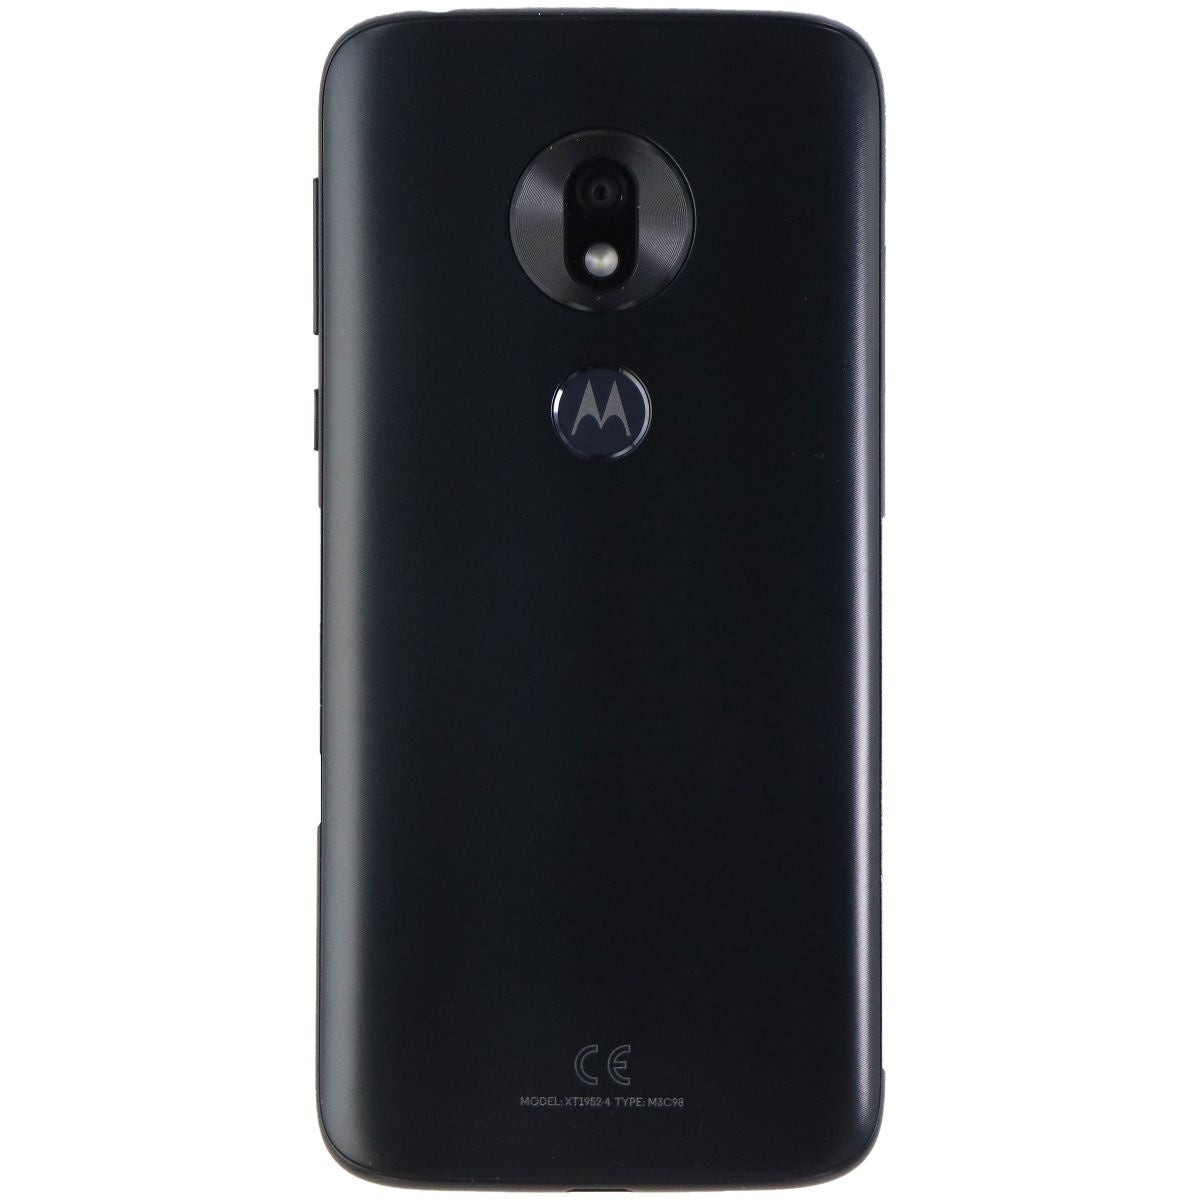 Motorola Moto G7 Play (5.7-inch) Smartphone XT1952-4 AT&T + Verizon - 32GB/Black Cell Phones & Smartphones Motorola    - Simple Cell Bulk Wholesale Pricing - USA Seller